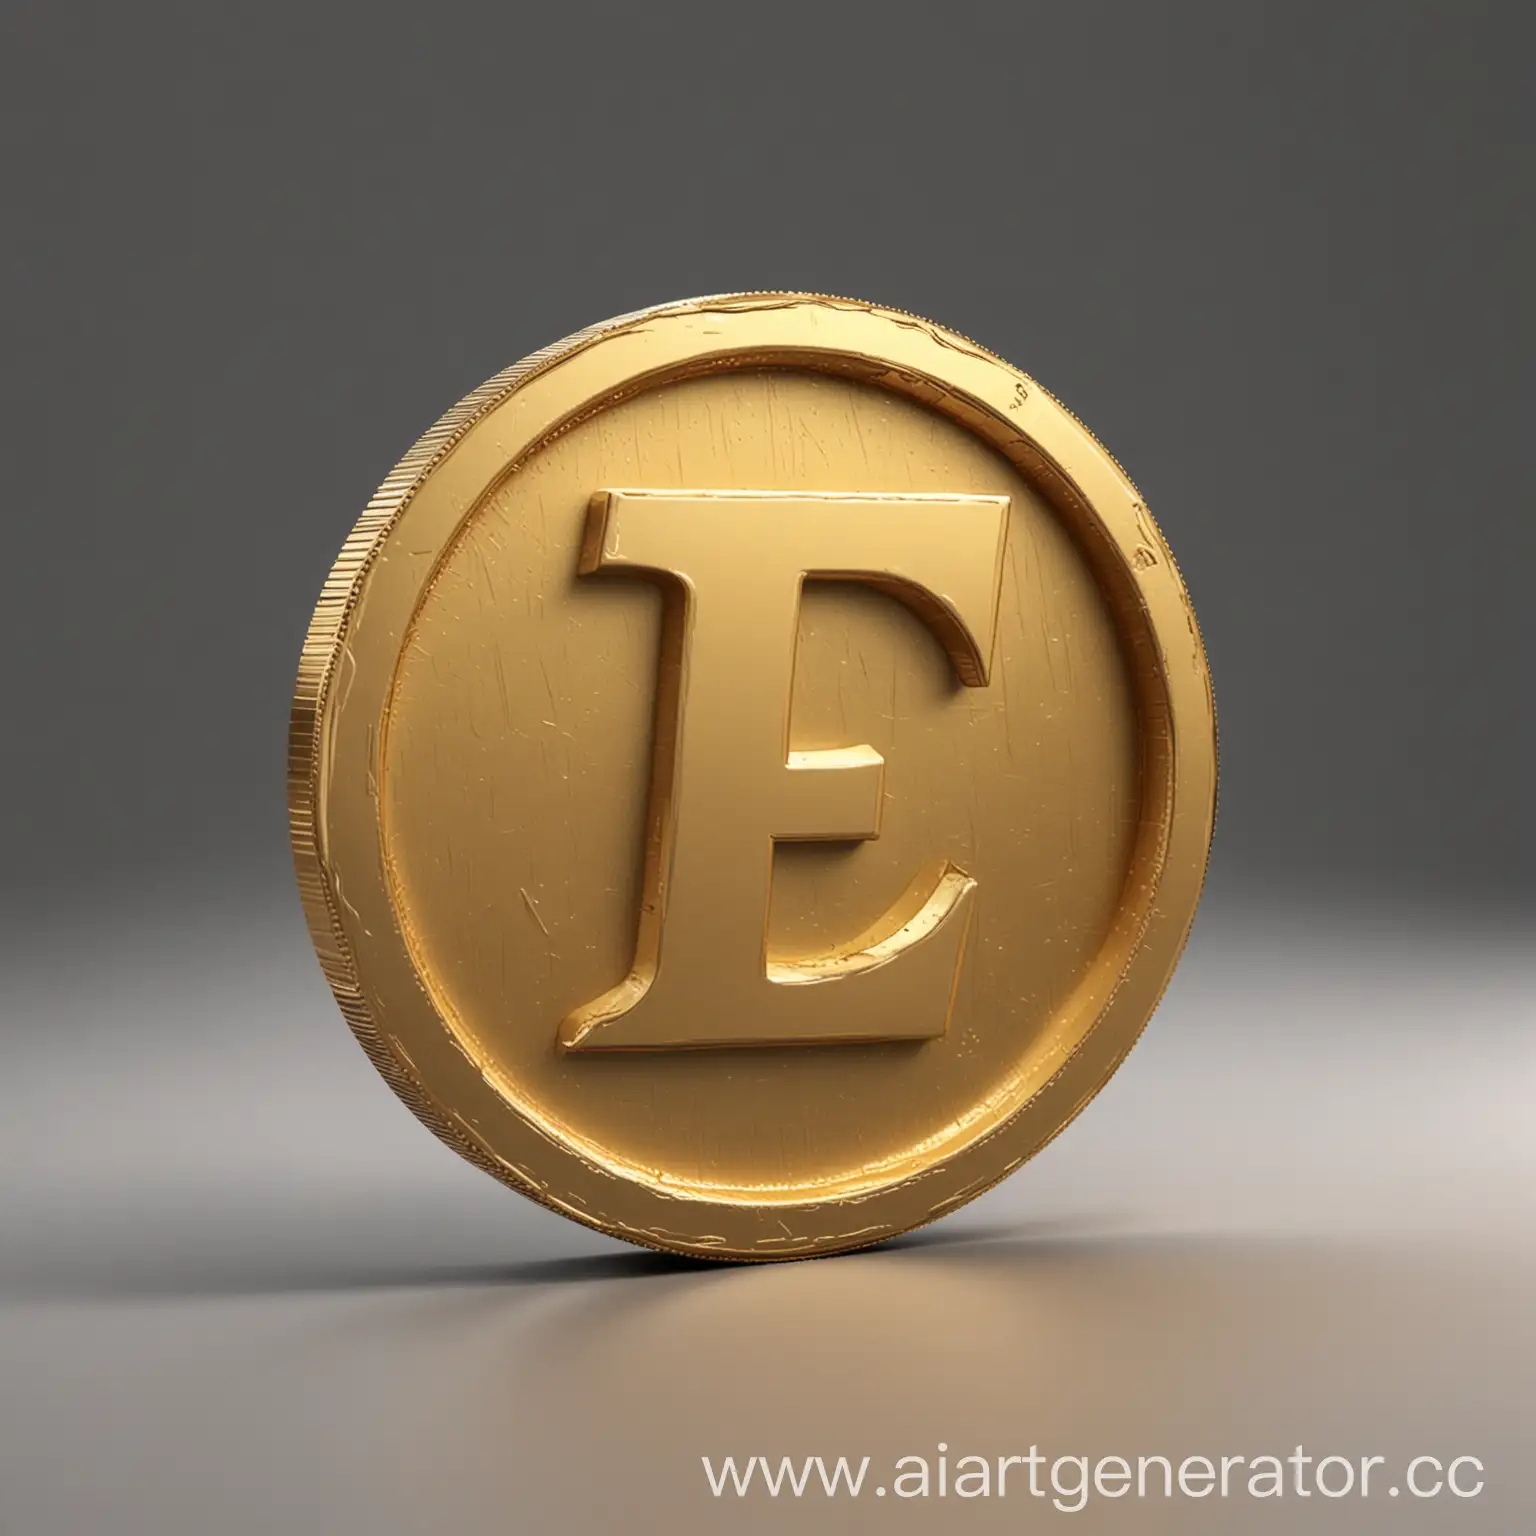 Golden-3D-Coin-with-Letter-E-Emblem